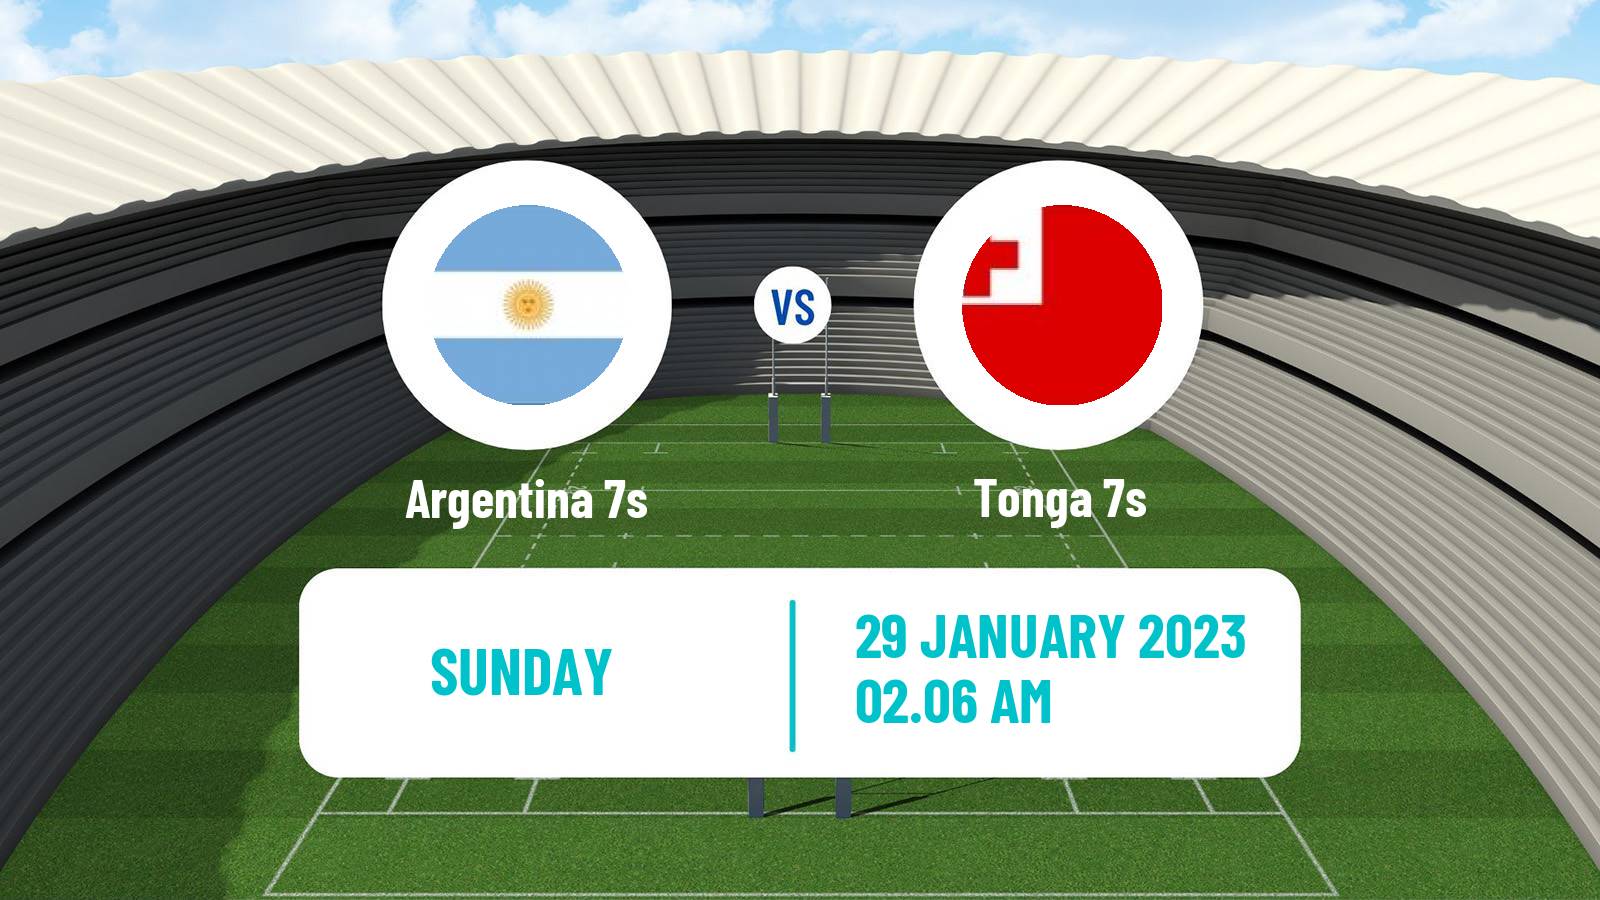 Rugby union Sevens World Series - Australia Argentina 7s - Tonga 7s